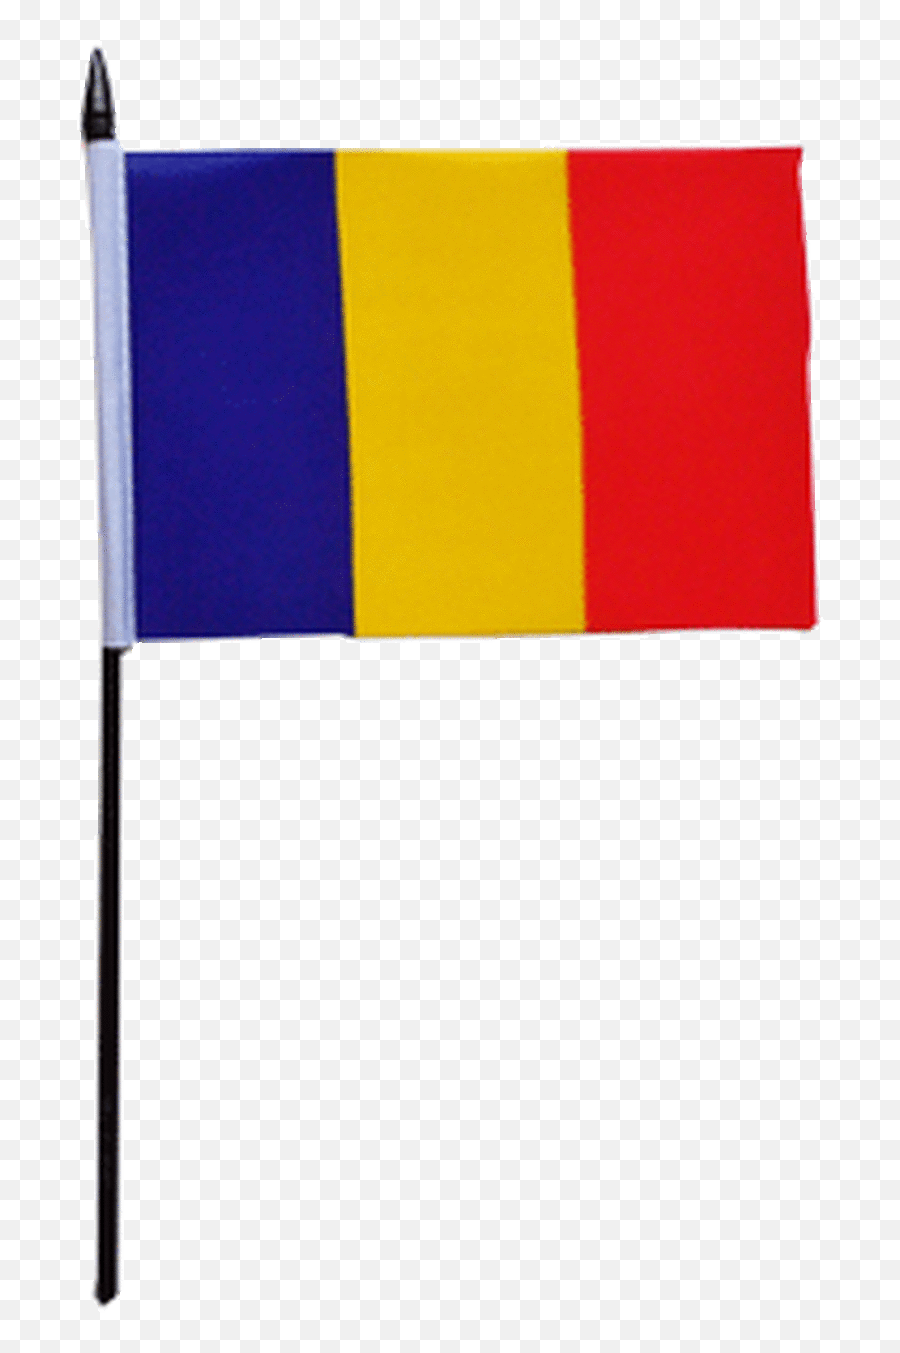 Chad Table Flag Set Of 3 Flags And Base Collectables U0026 Art Emoji,Emoticon Fb Tangan Nunjuk Ke Atas